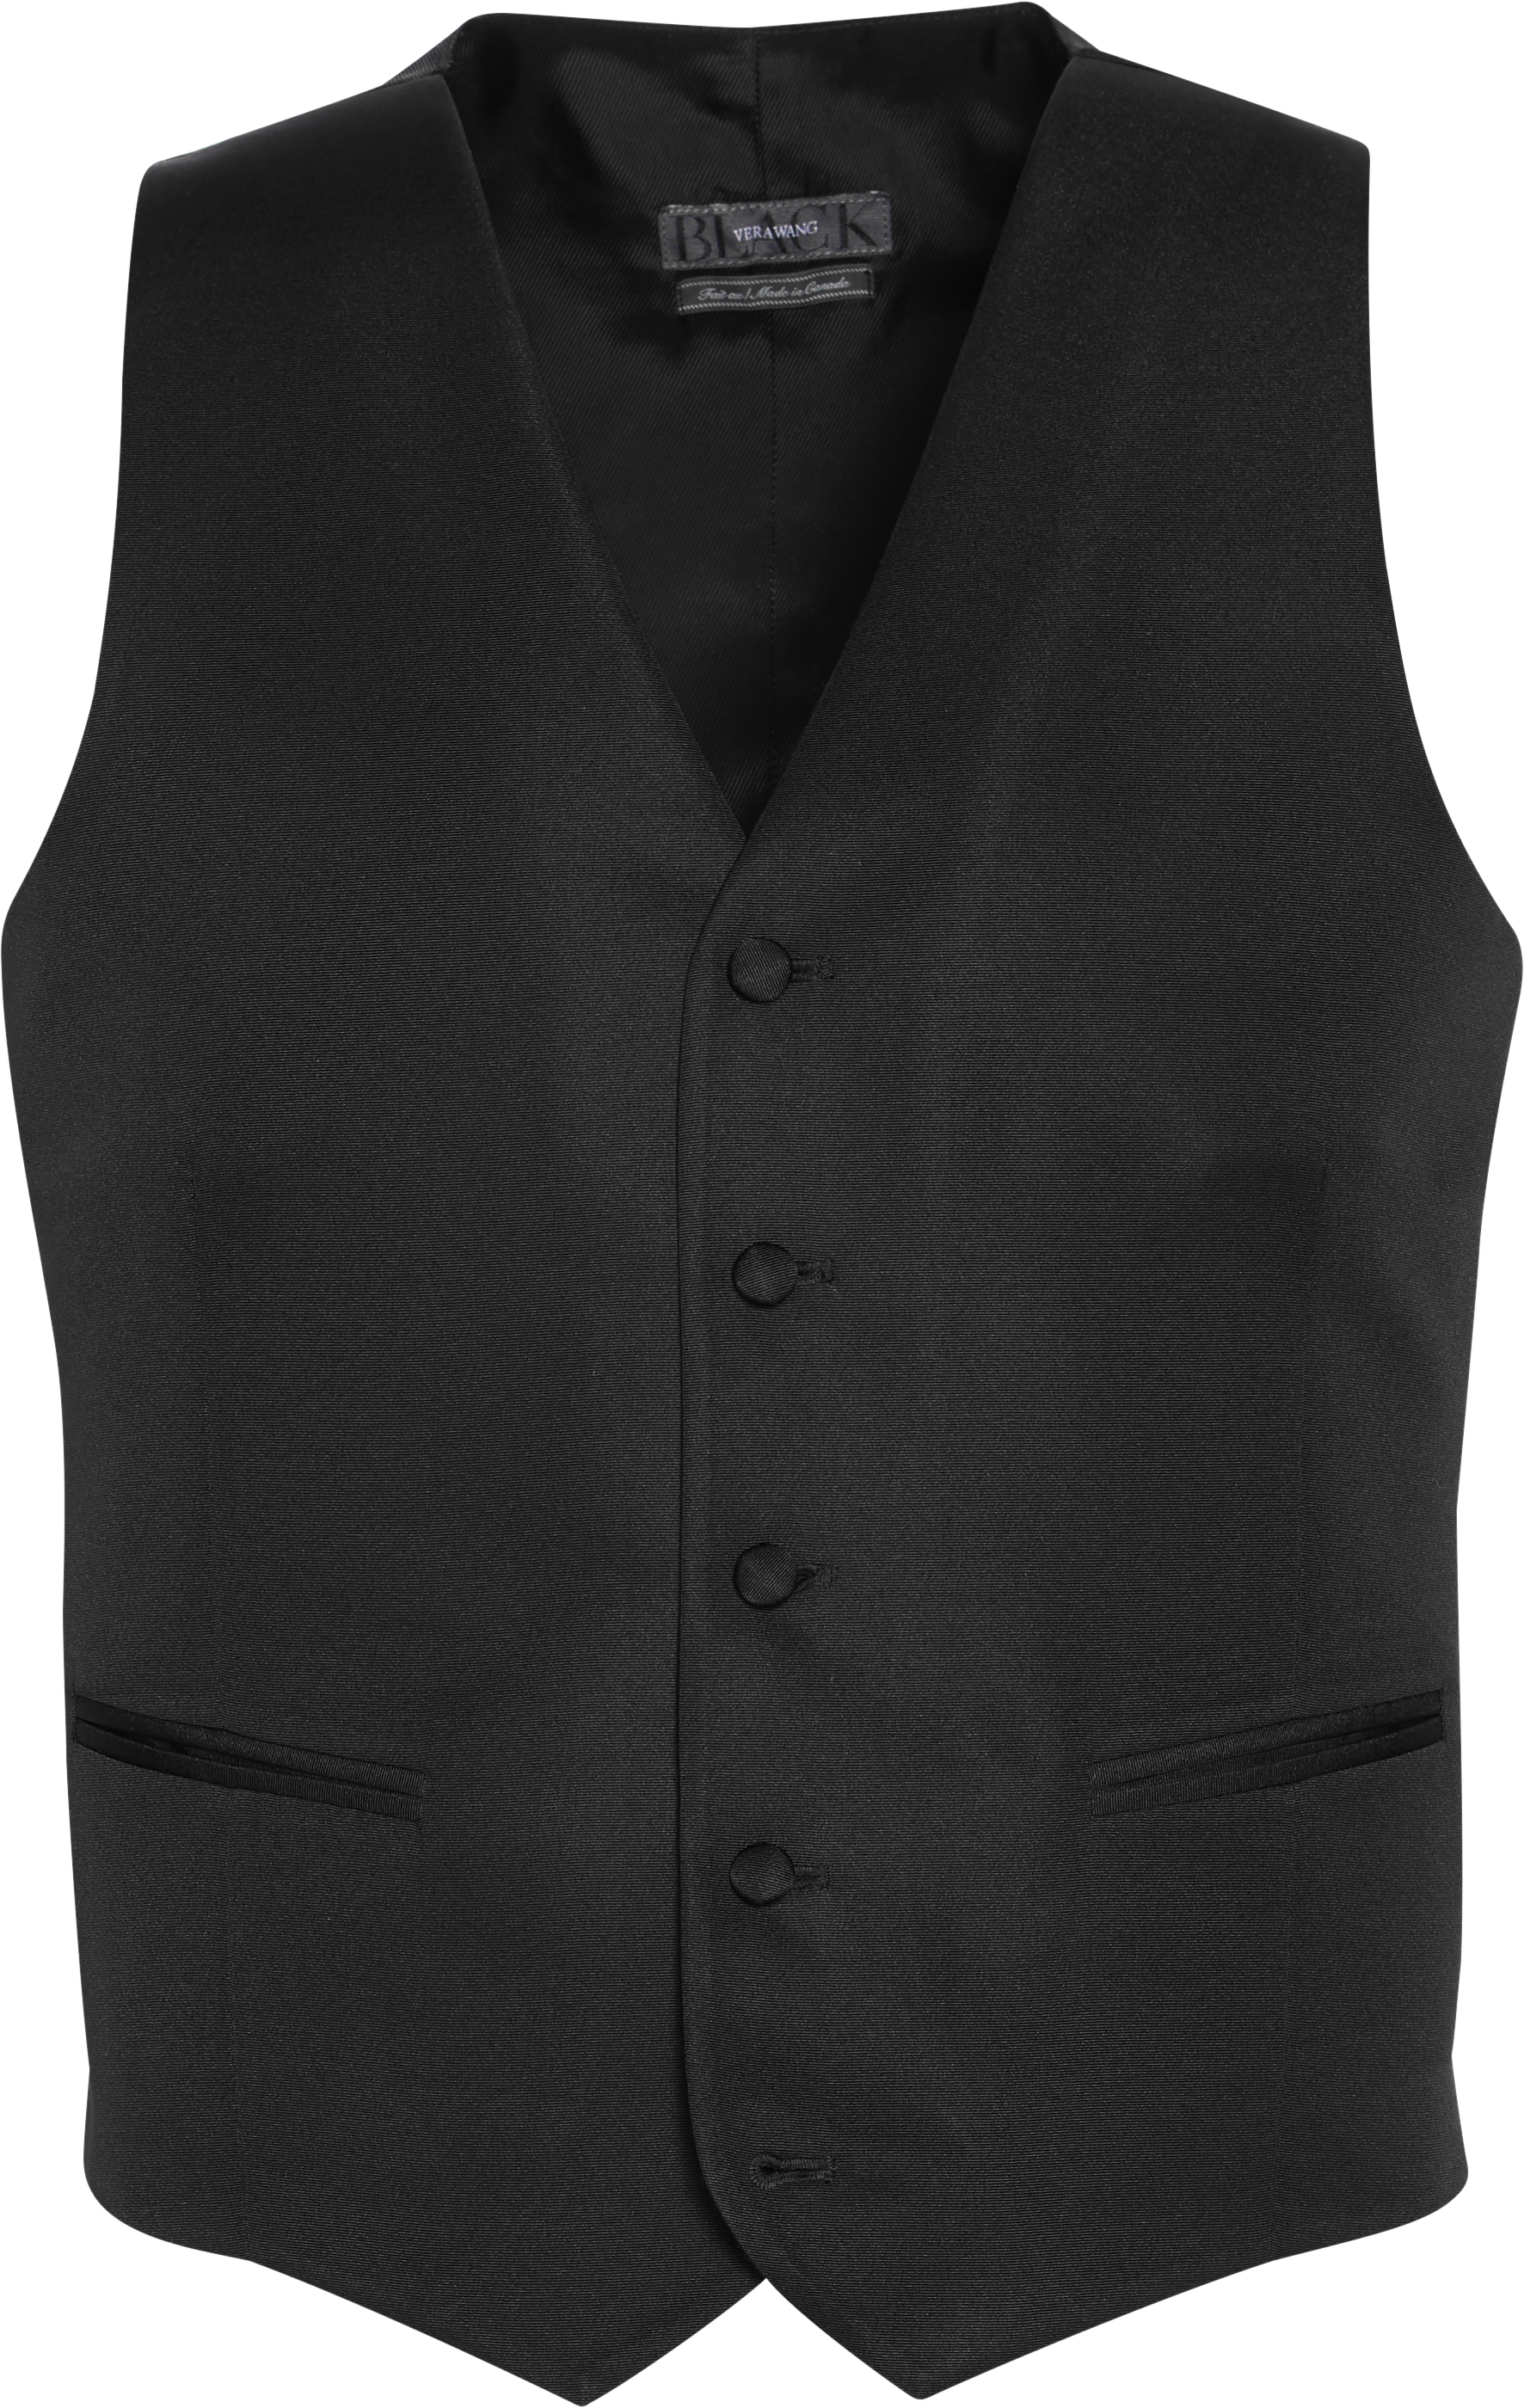 vera wang slim fit suit separates tuxedo vest